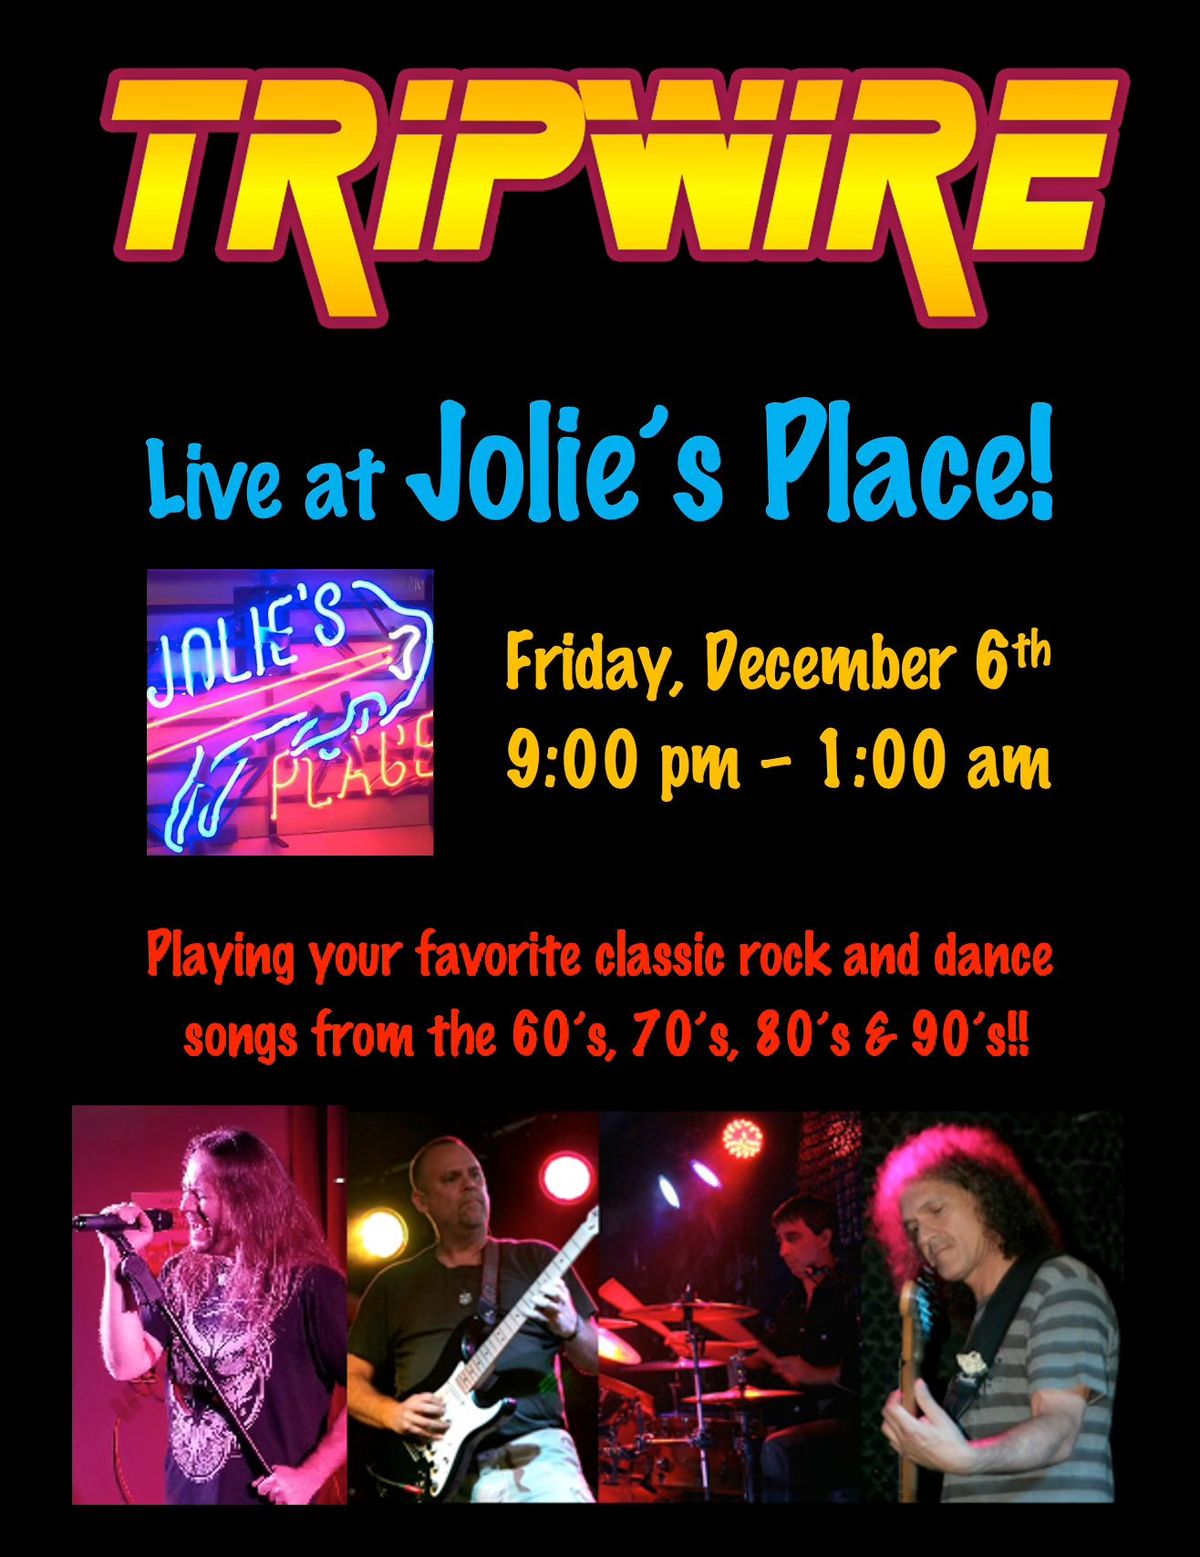 Tripwire Returns to Jolie's Place!